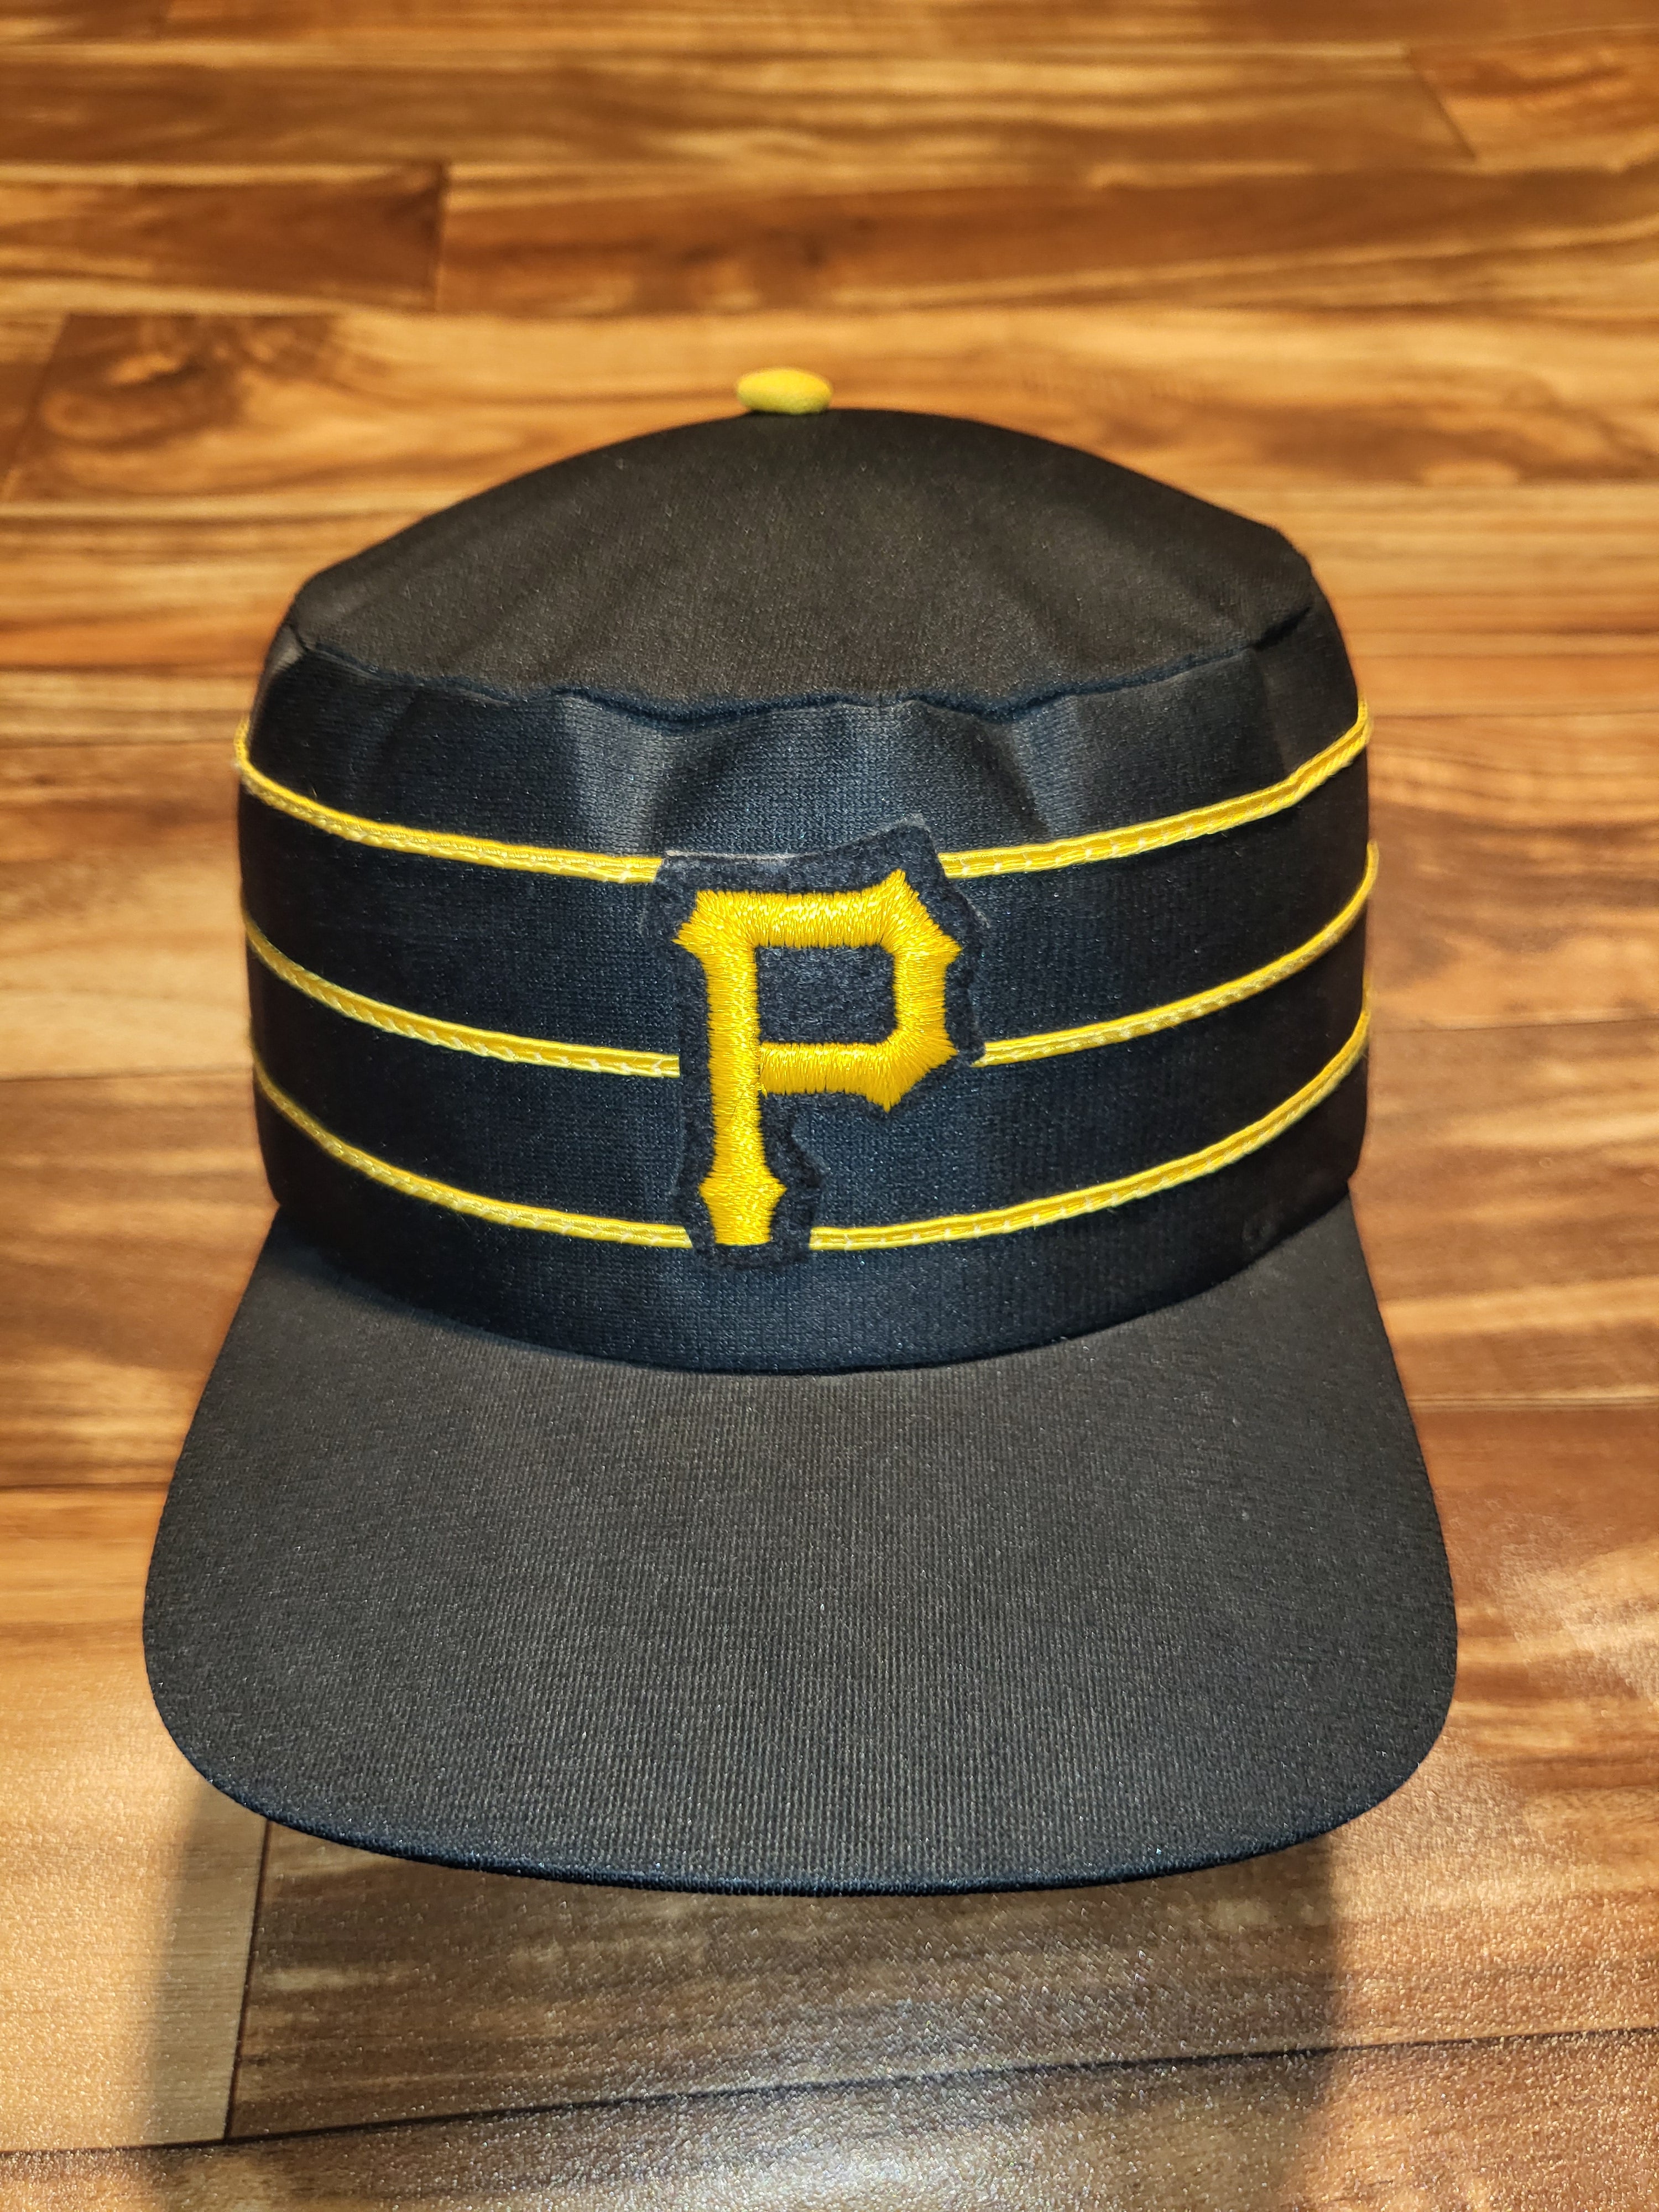 Pittsburgh Pirates Hat 